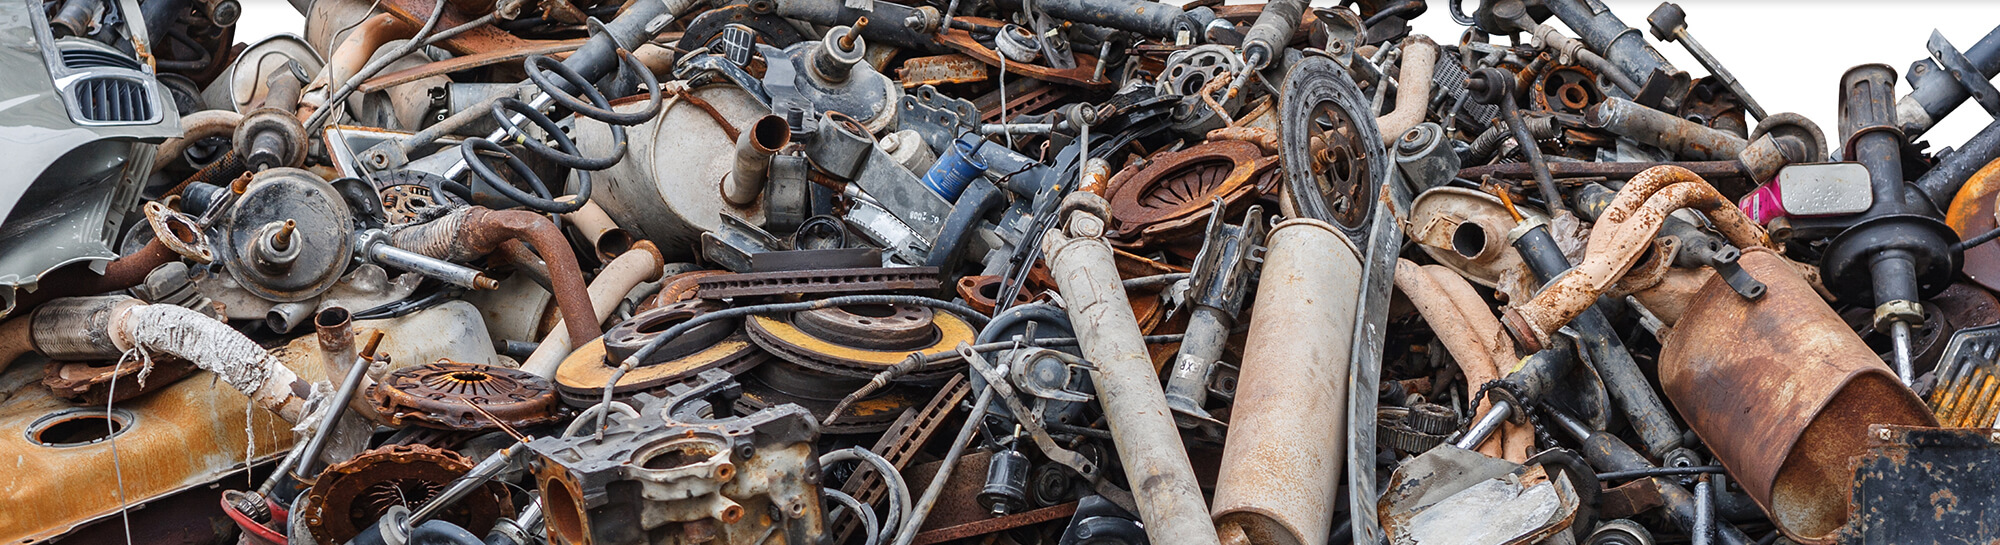 Pile of scrap auto parts